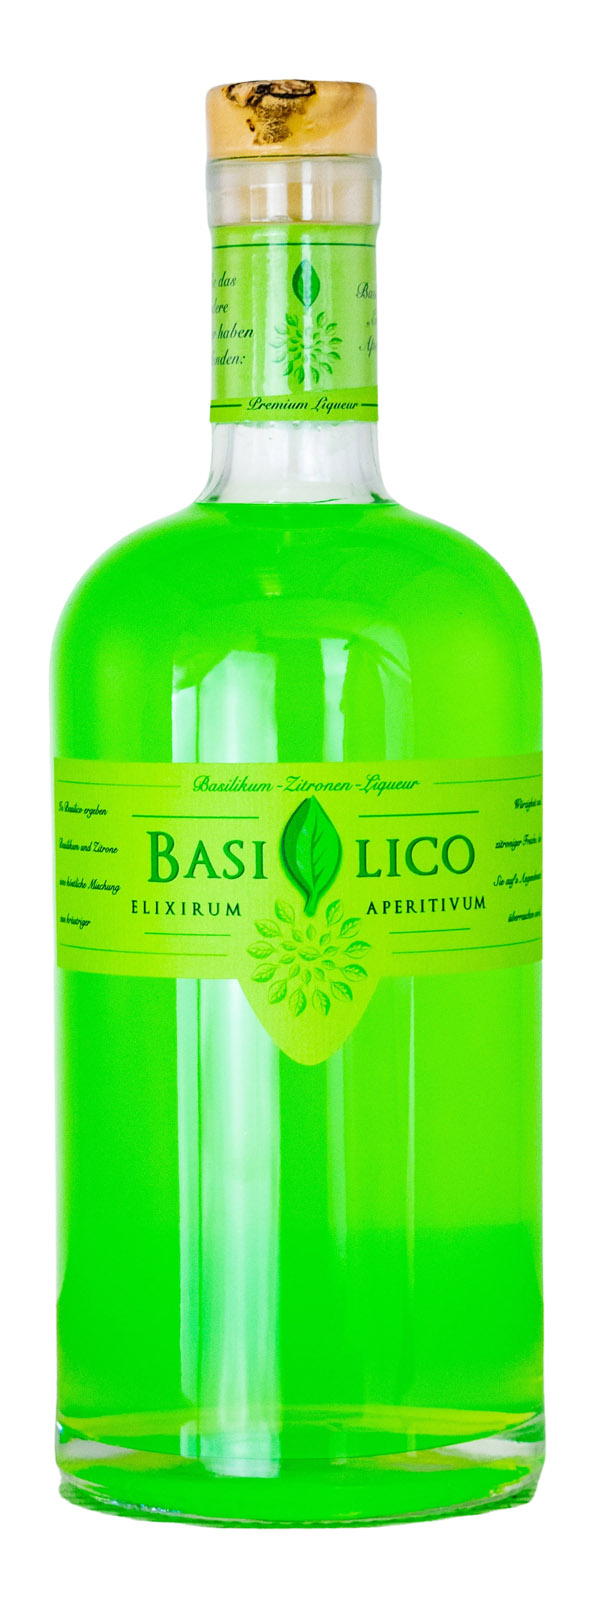 Basilico Basilikum-Zitrone-Likör - 1 Liter 20% vol